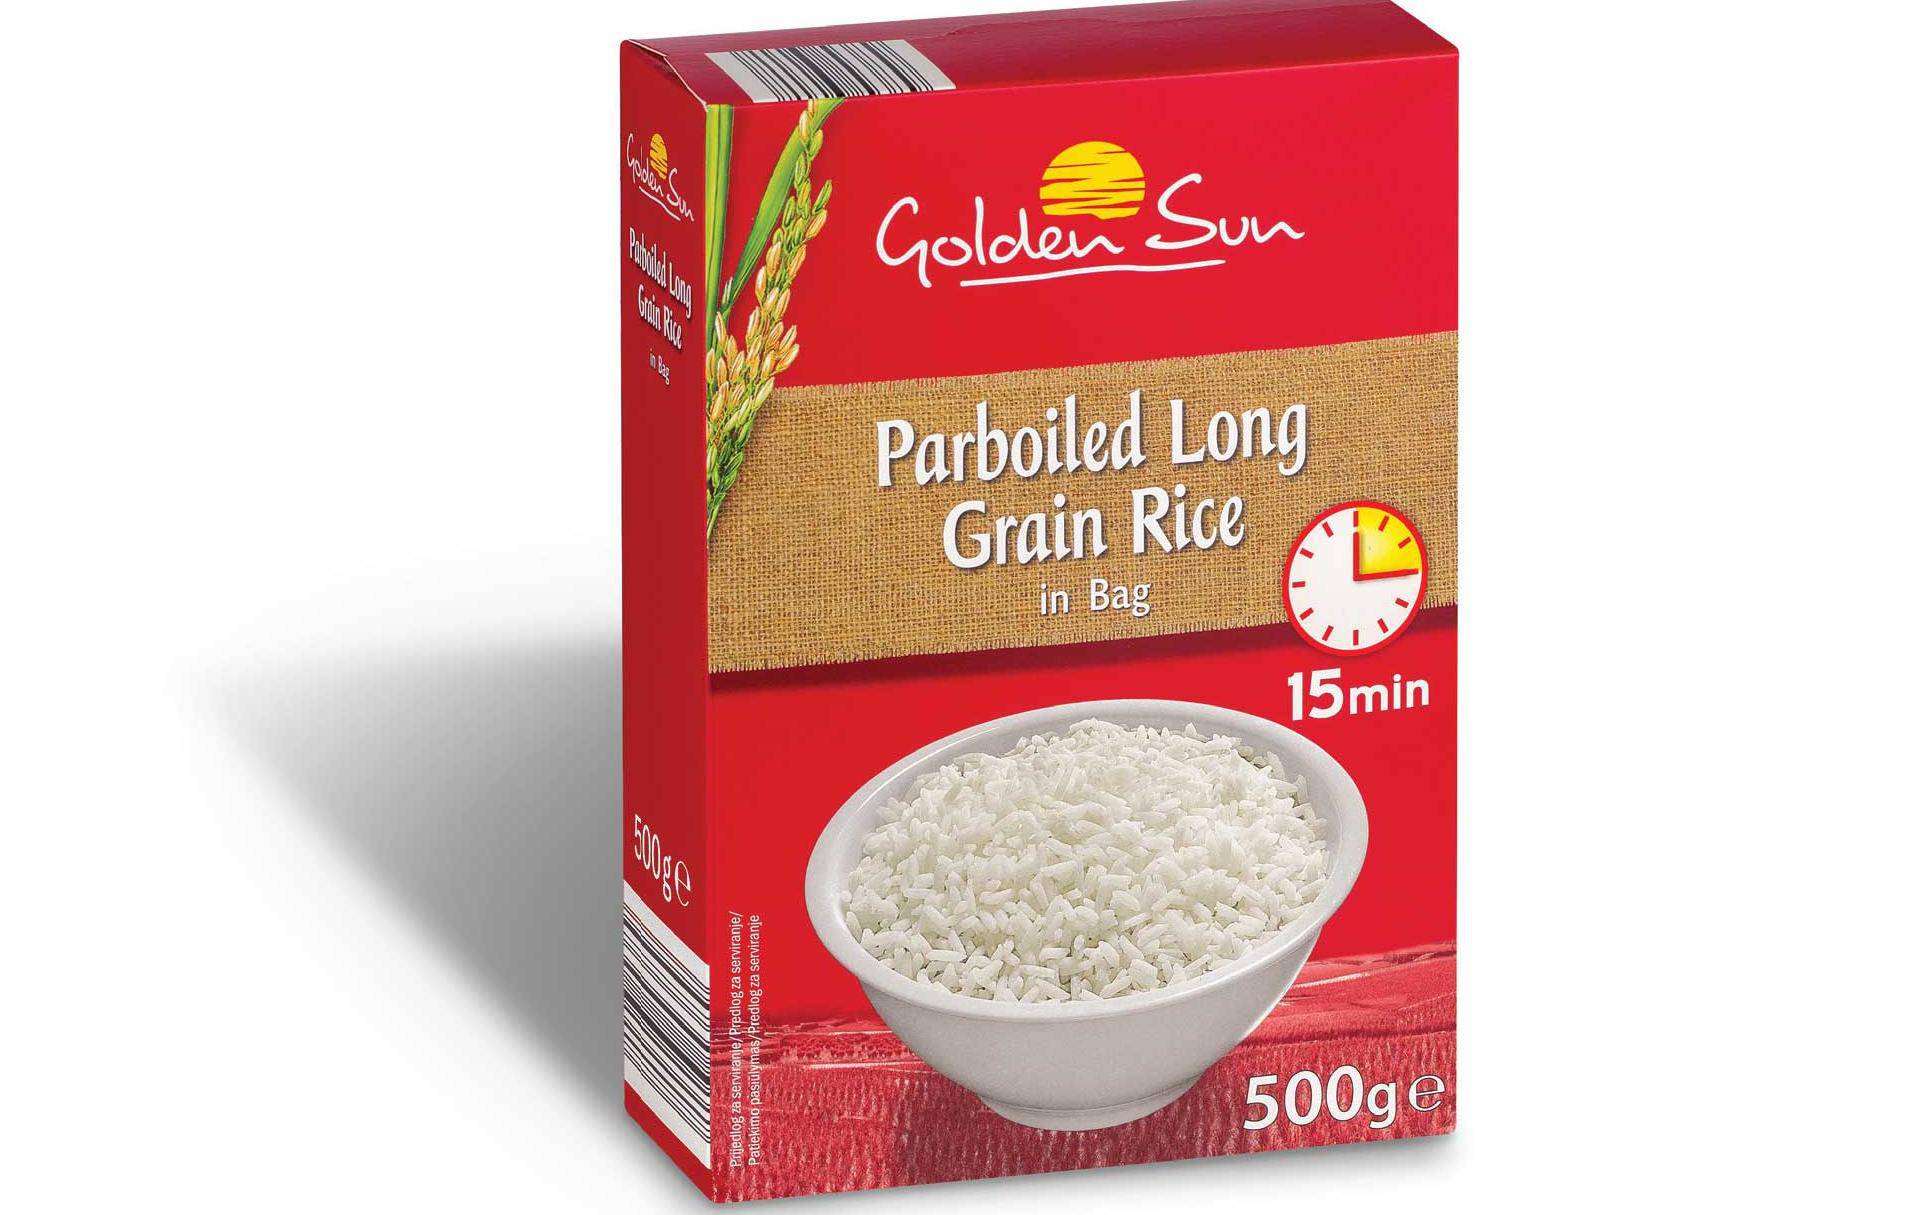 Zbog pesticida: Lidl povukao tajlandsku rižu 'Golden Sun'